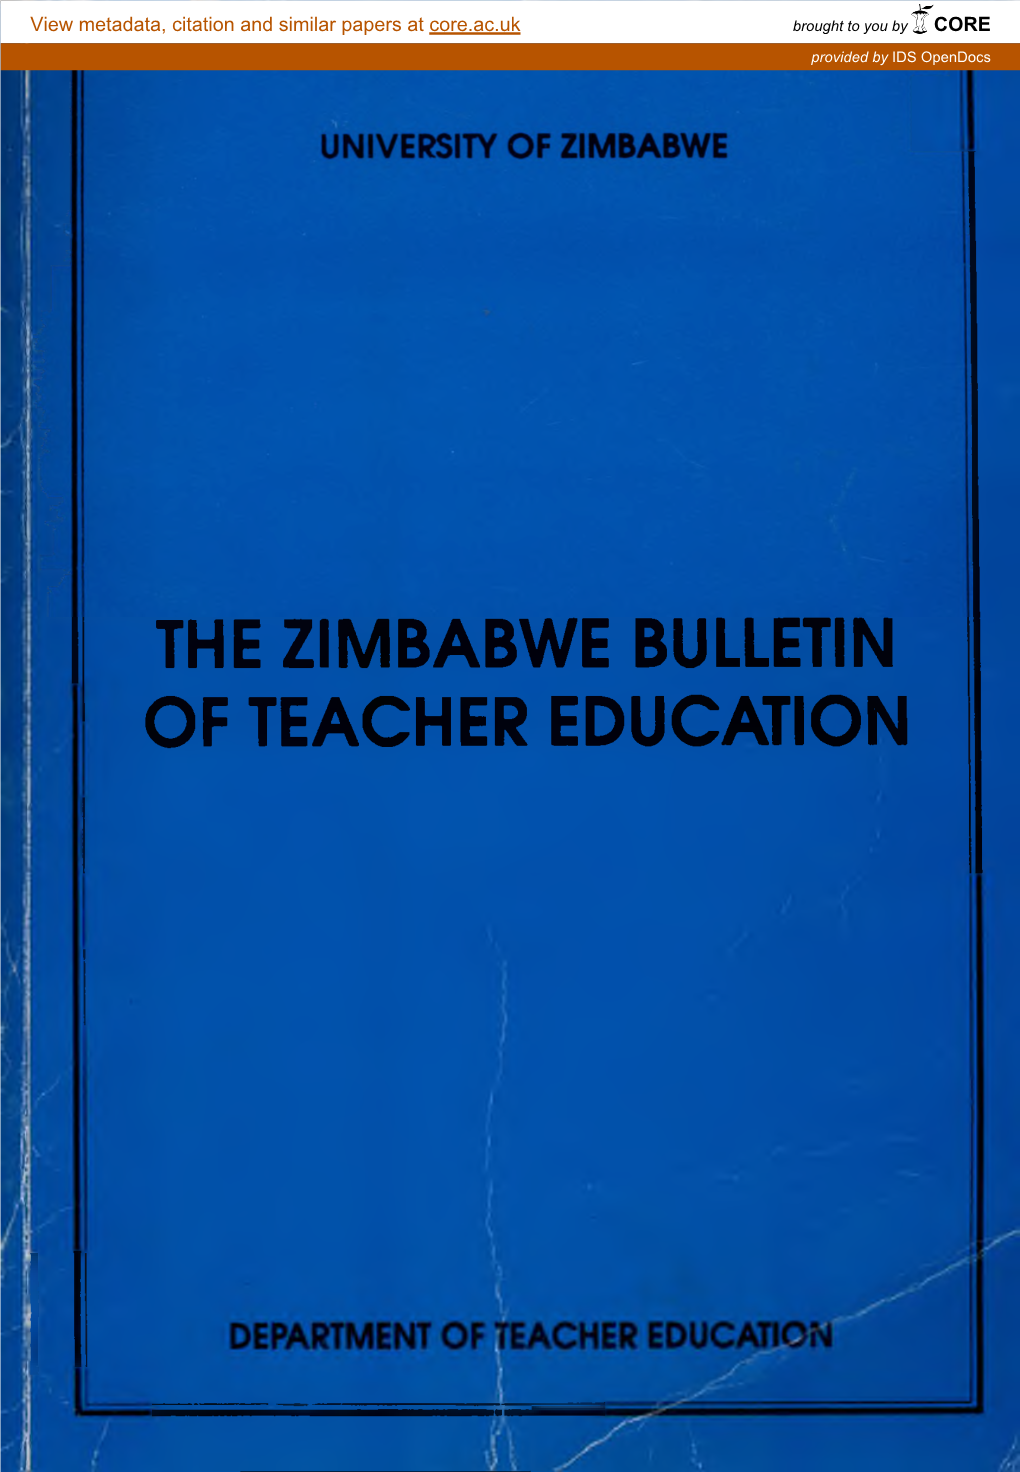 THE ZIMBABWE BULLETIN of TEACHER EDUCATION the Zimbabwe Bulletin of Teacher